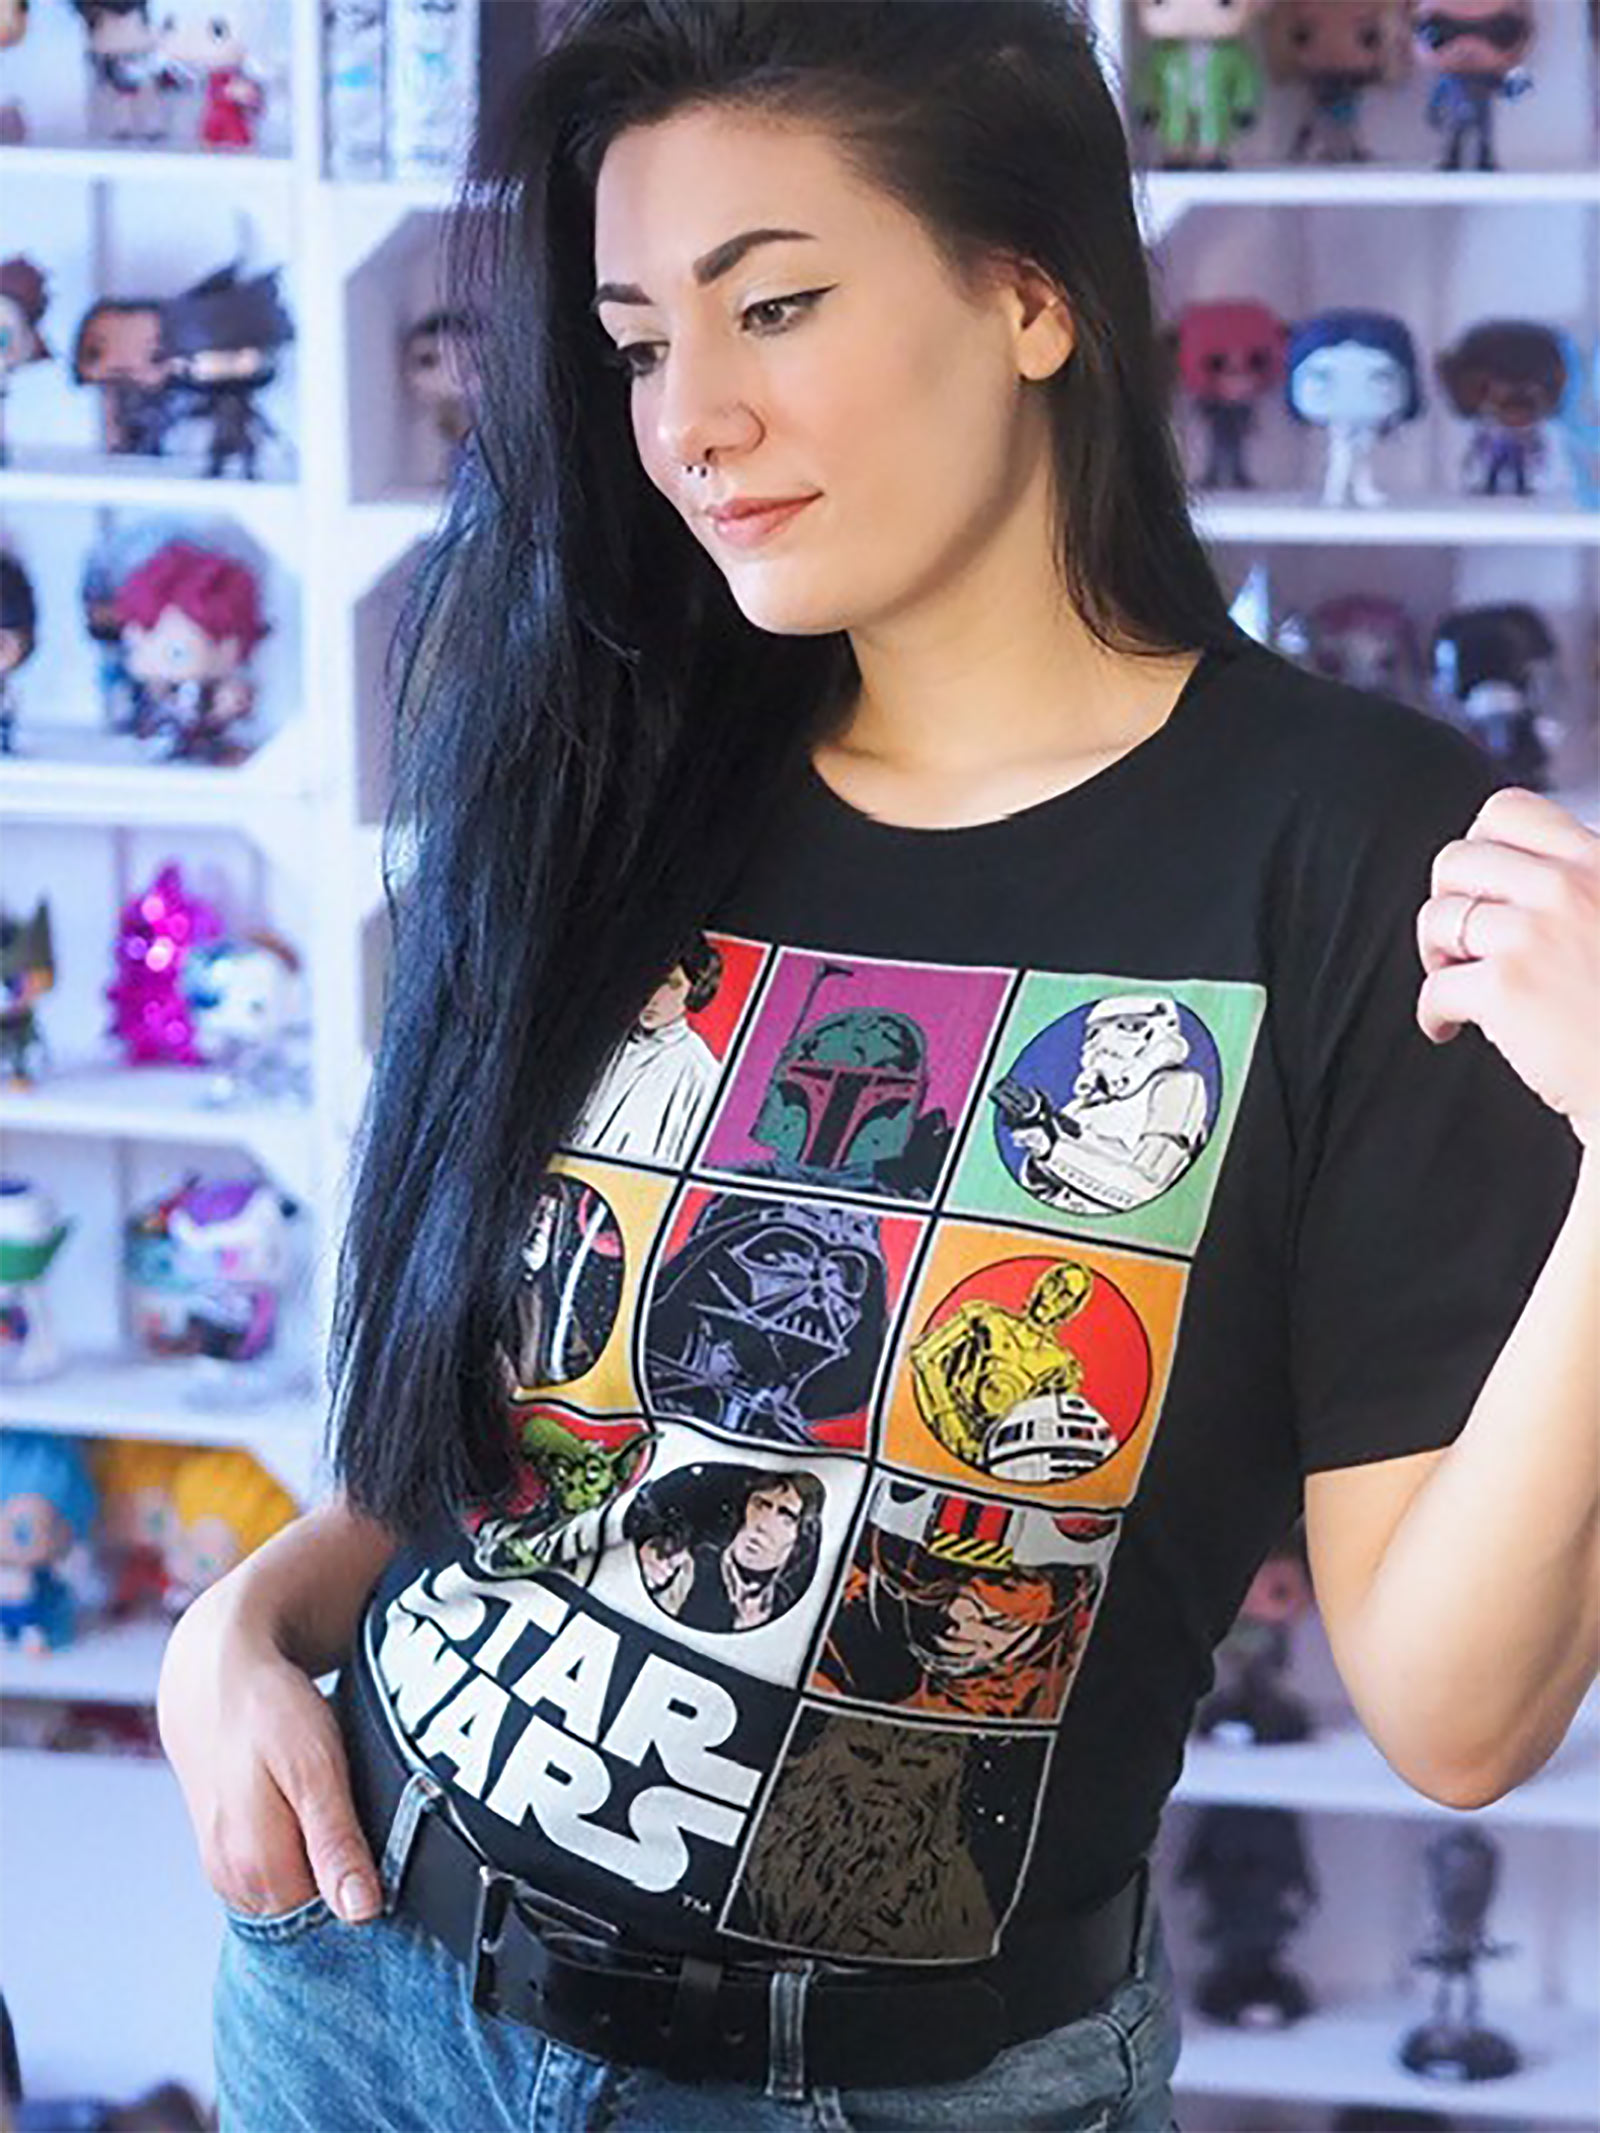 Star Wars - Characters T-Shirt black